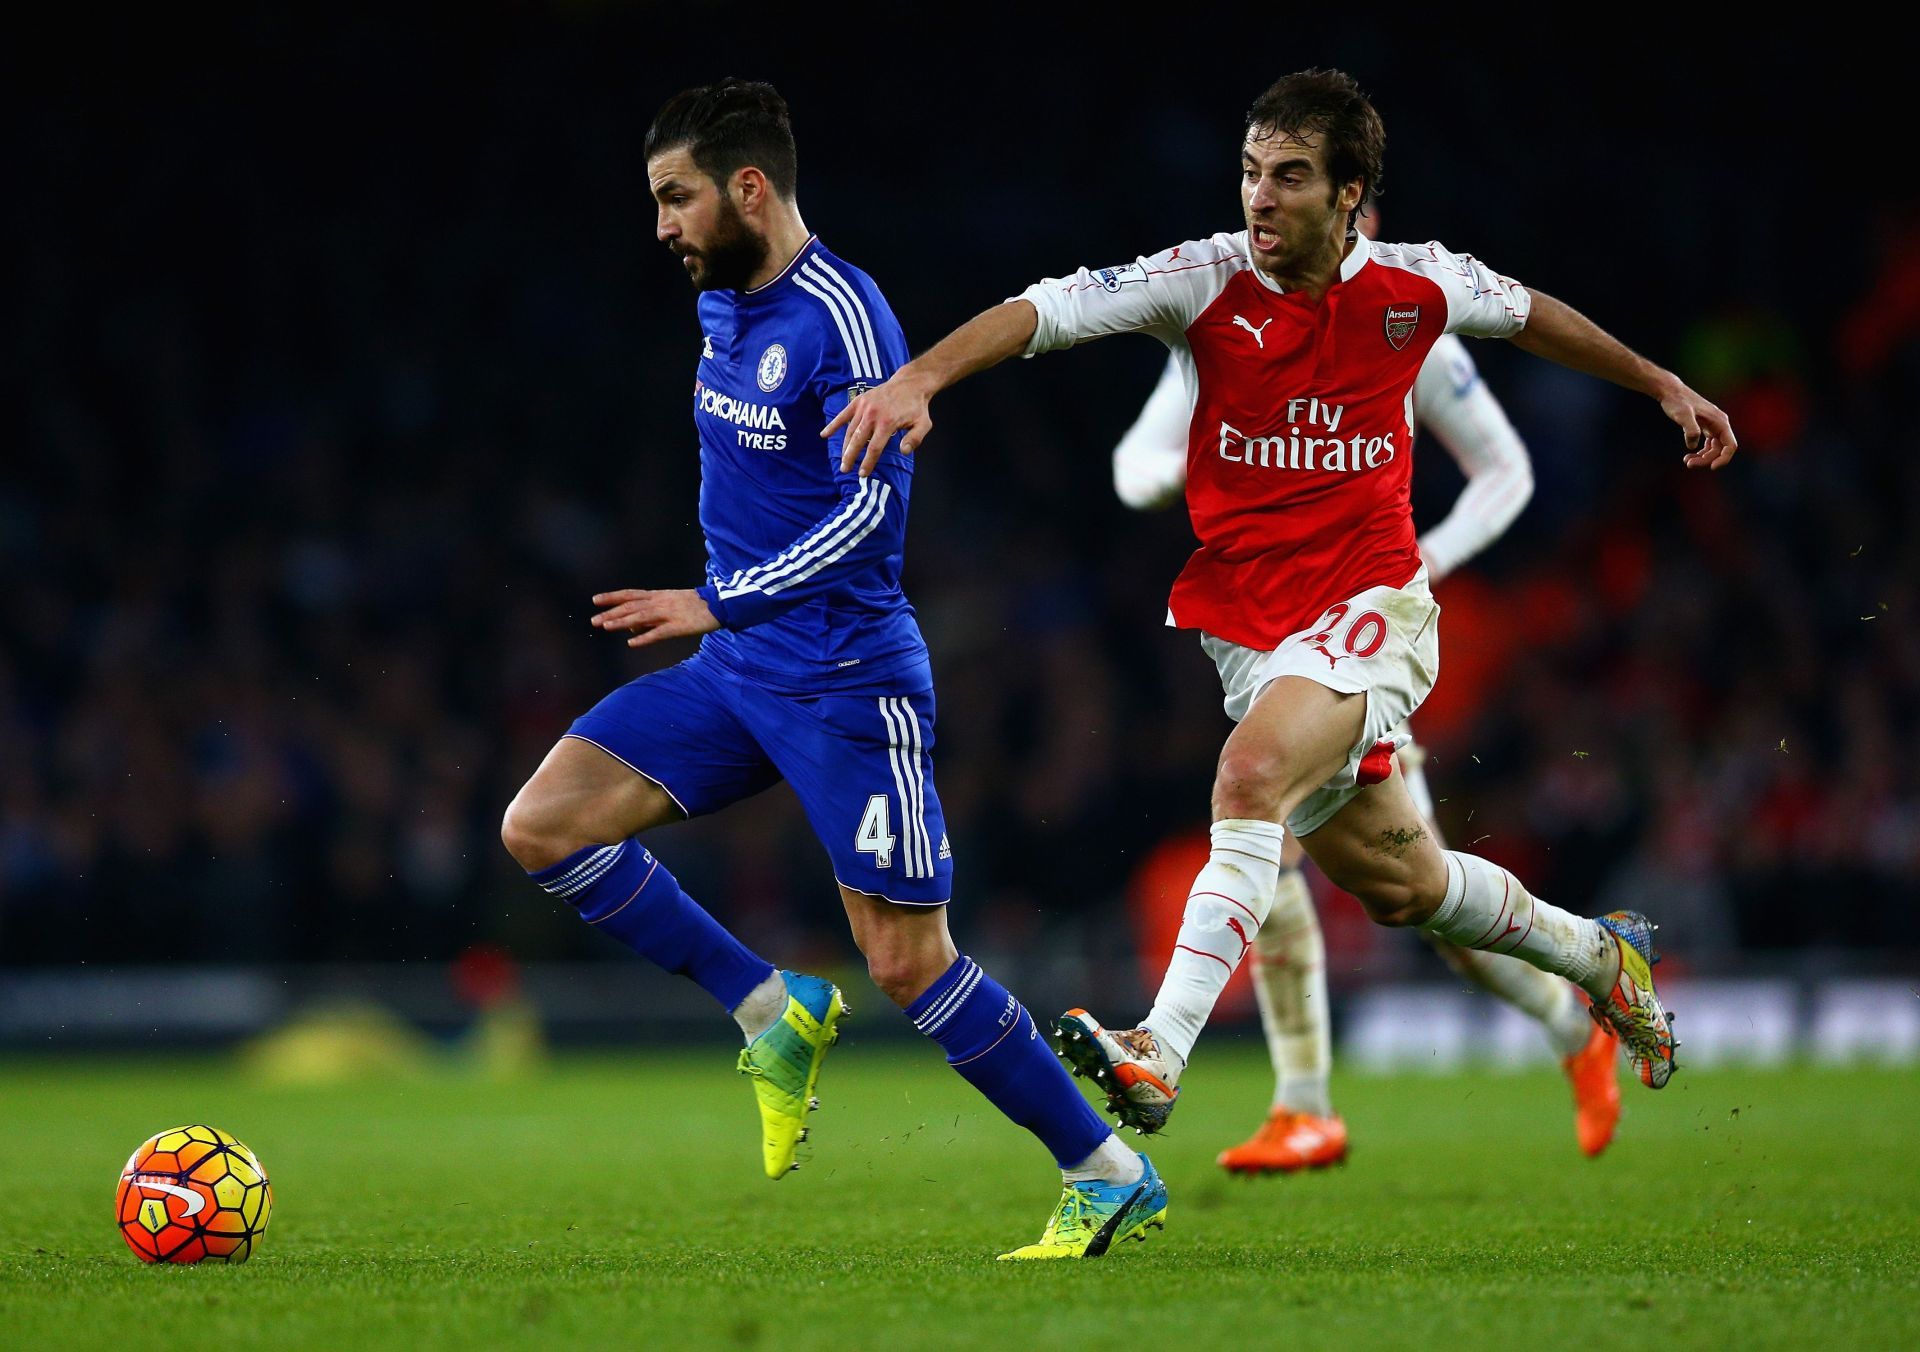 Cesc Fabregas in action for Chelsea against the Gunners.